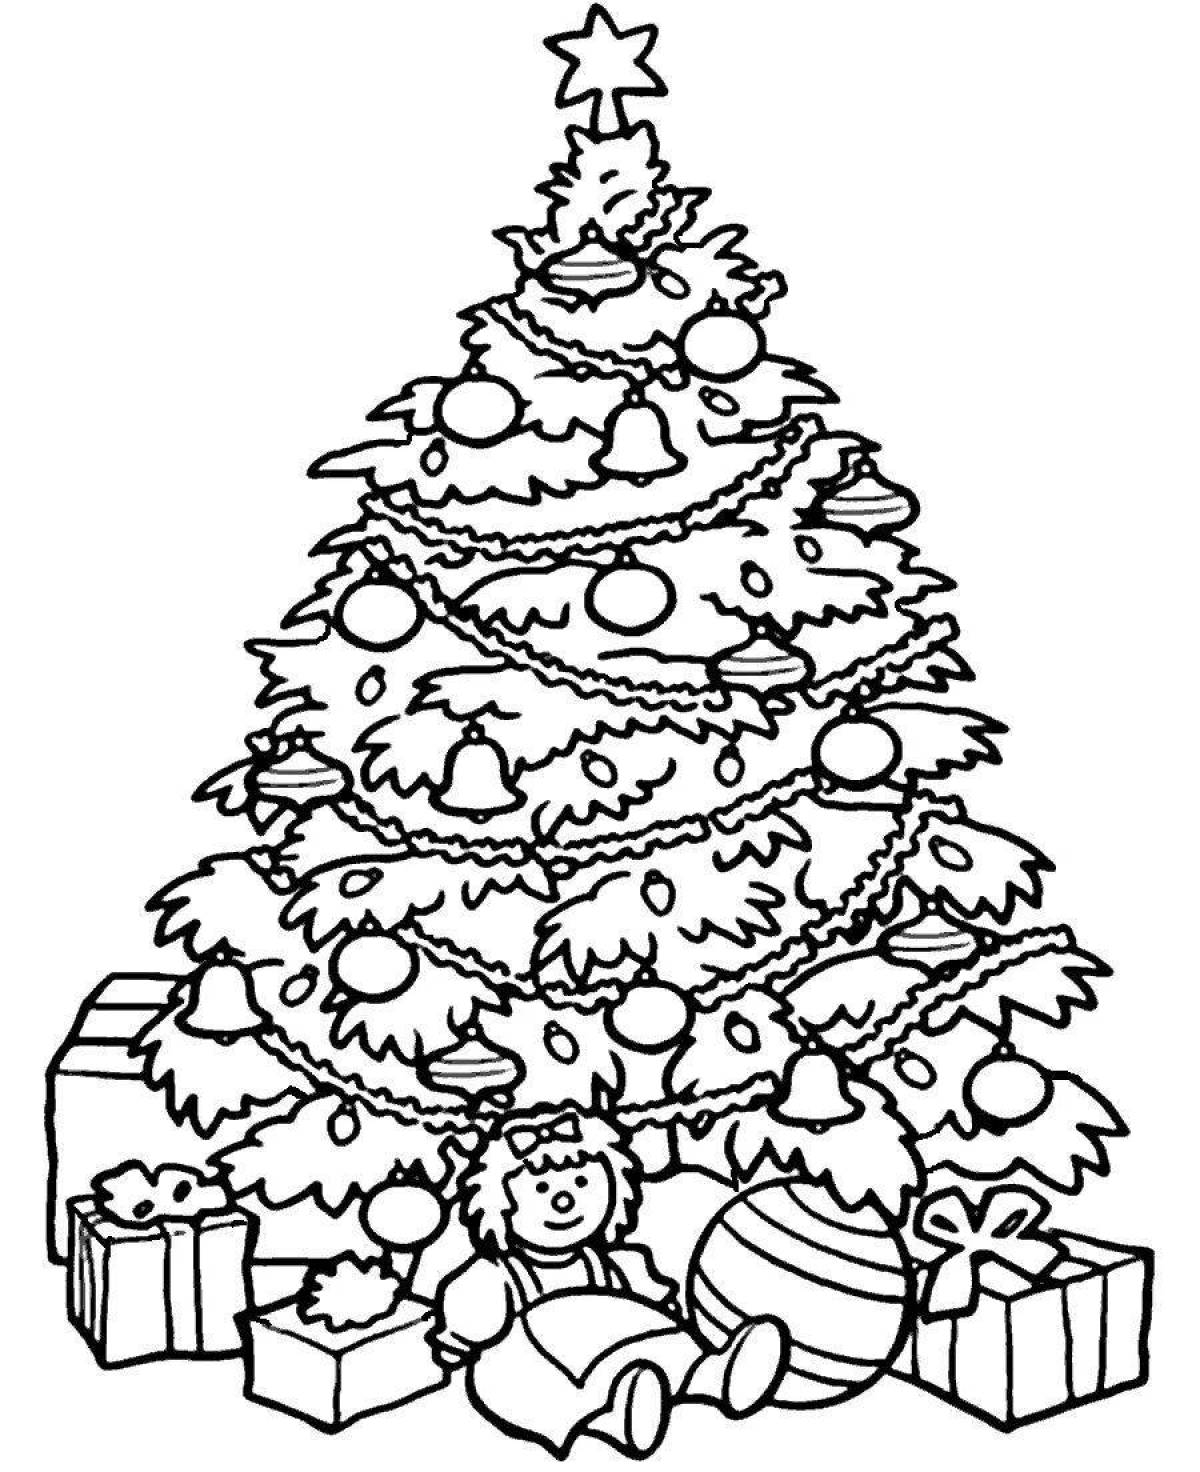 Wonderful Christmas tree with toys